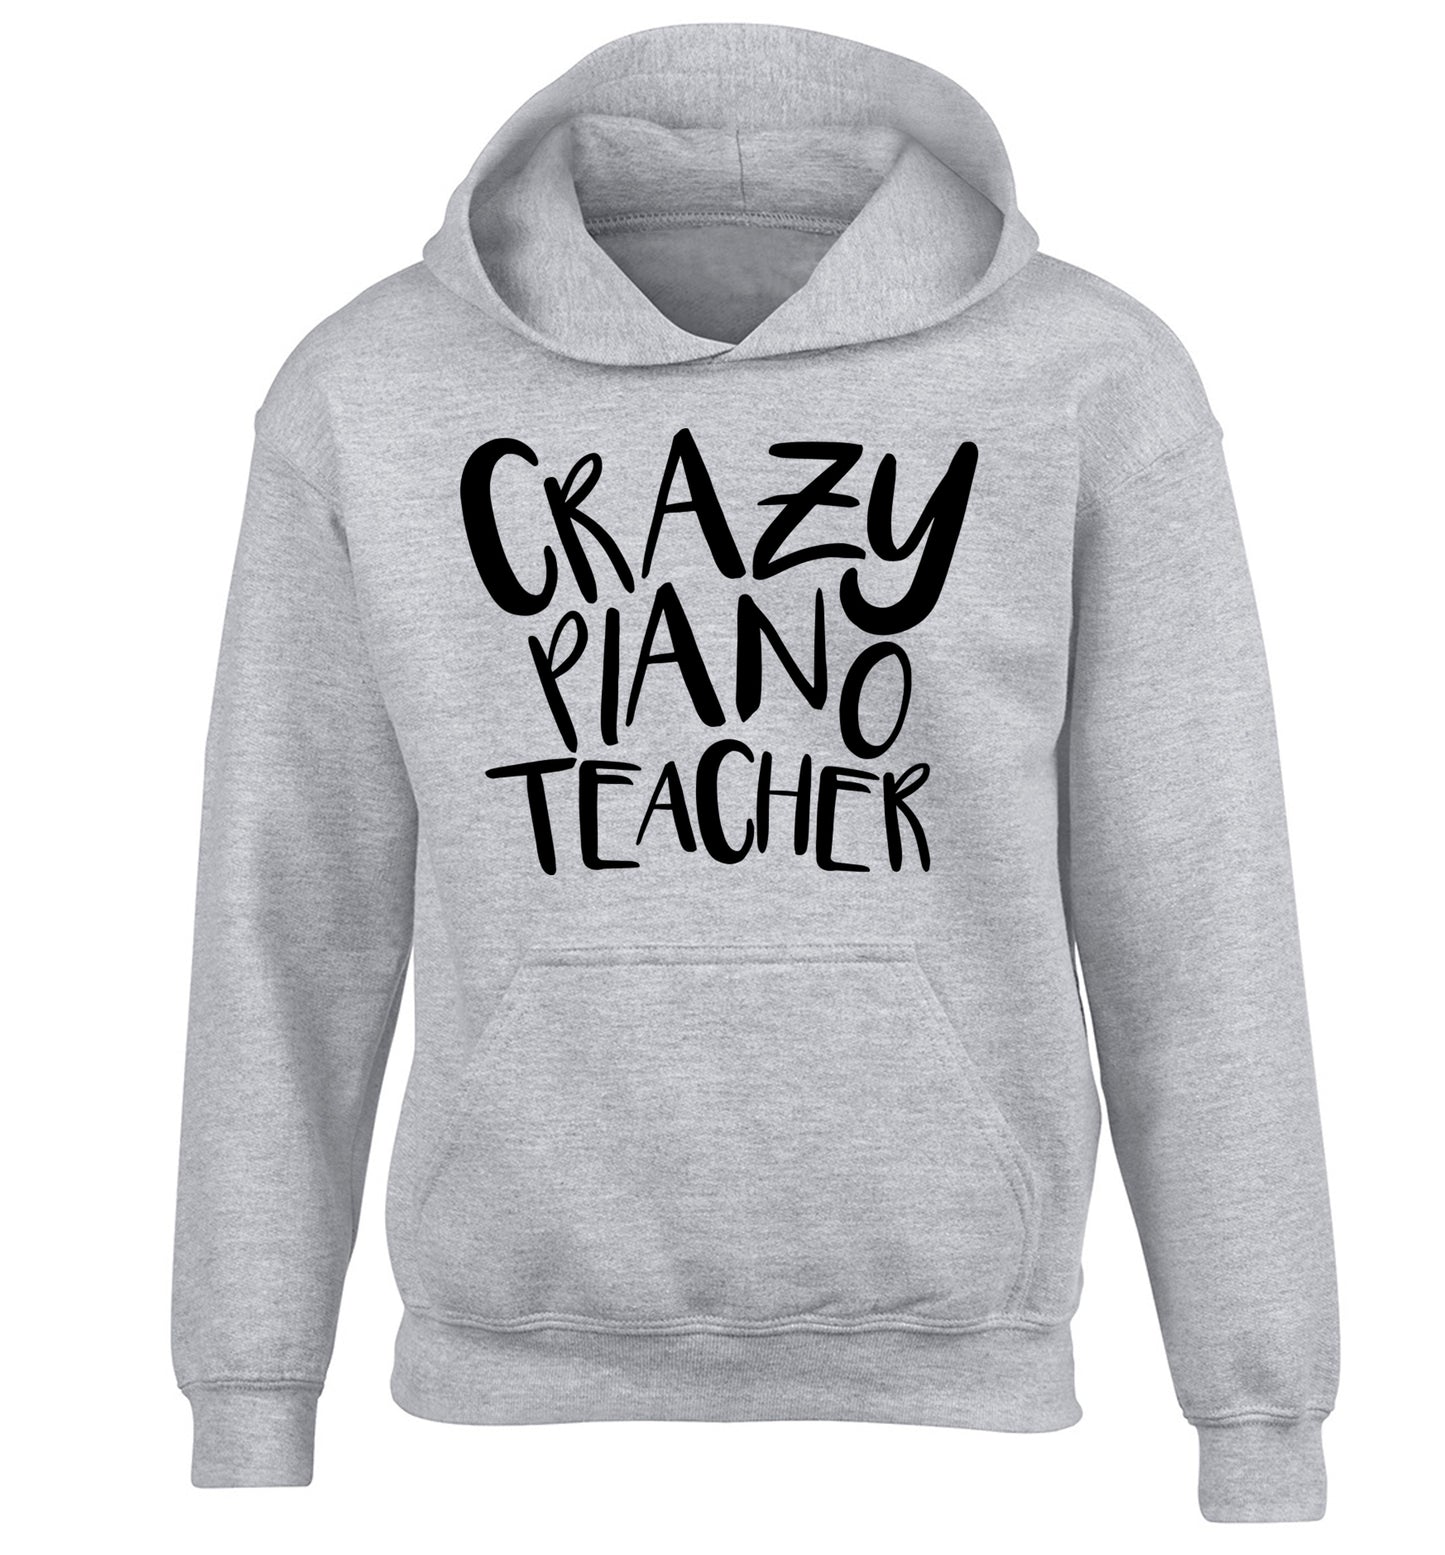 Crazy piano teacher children's grey hoodie 12-13 Years